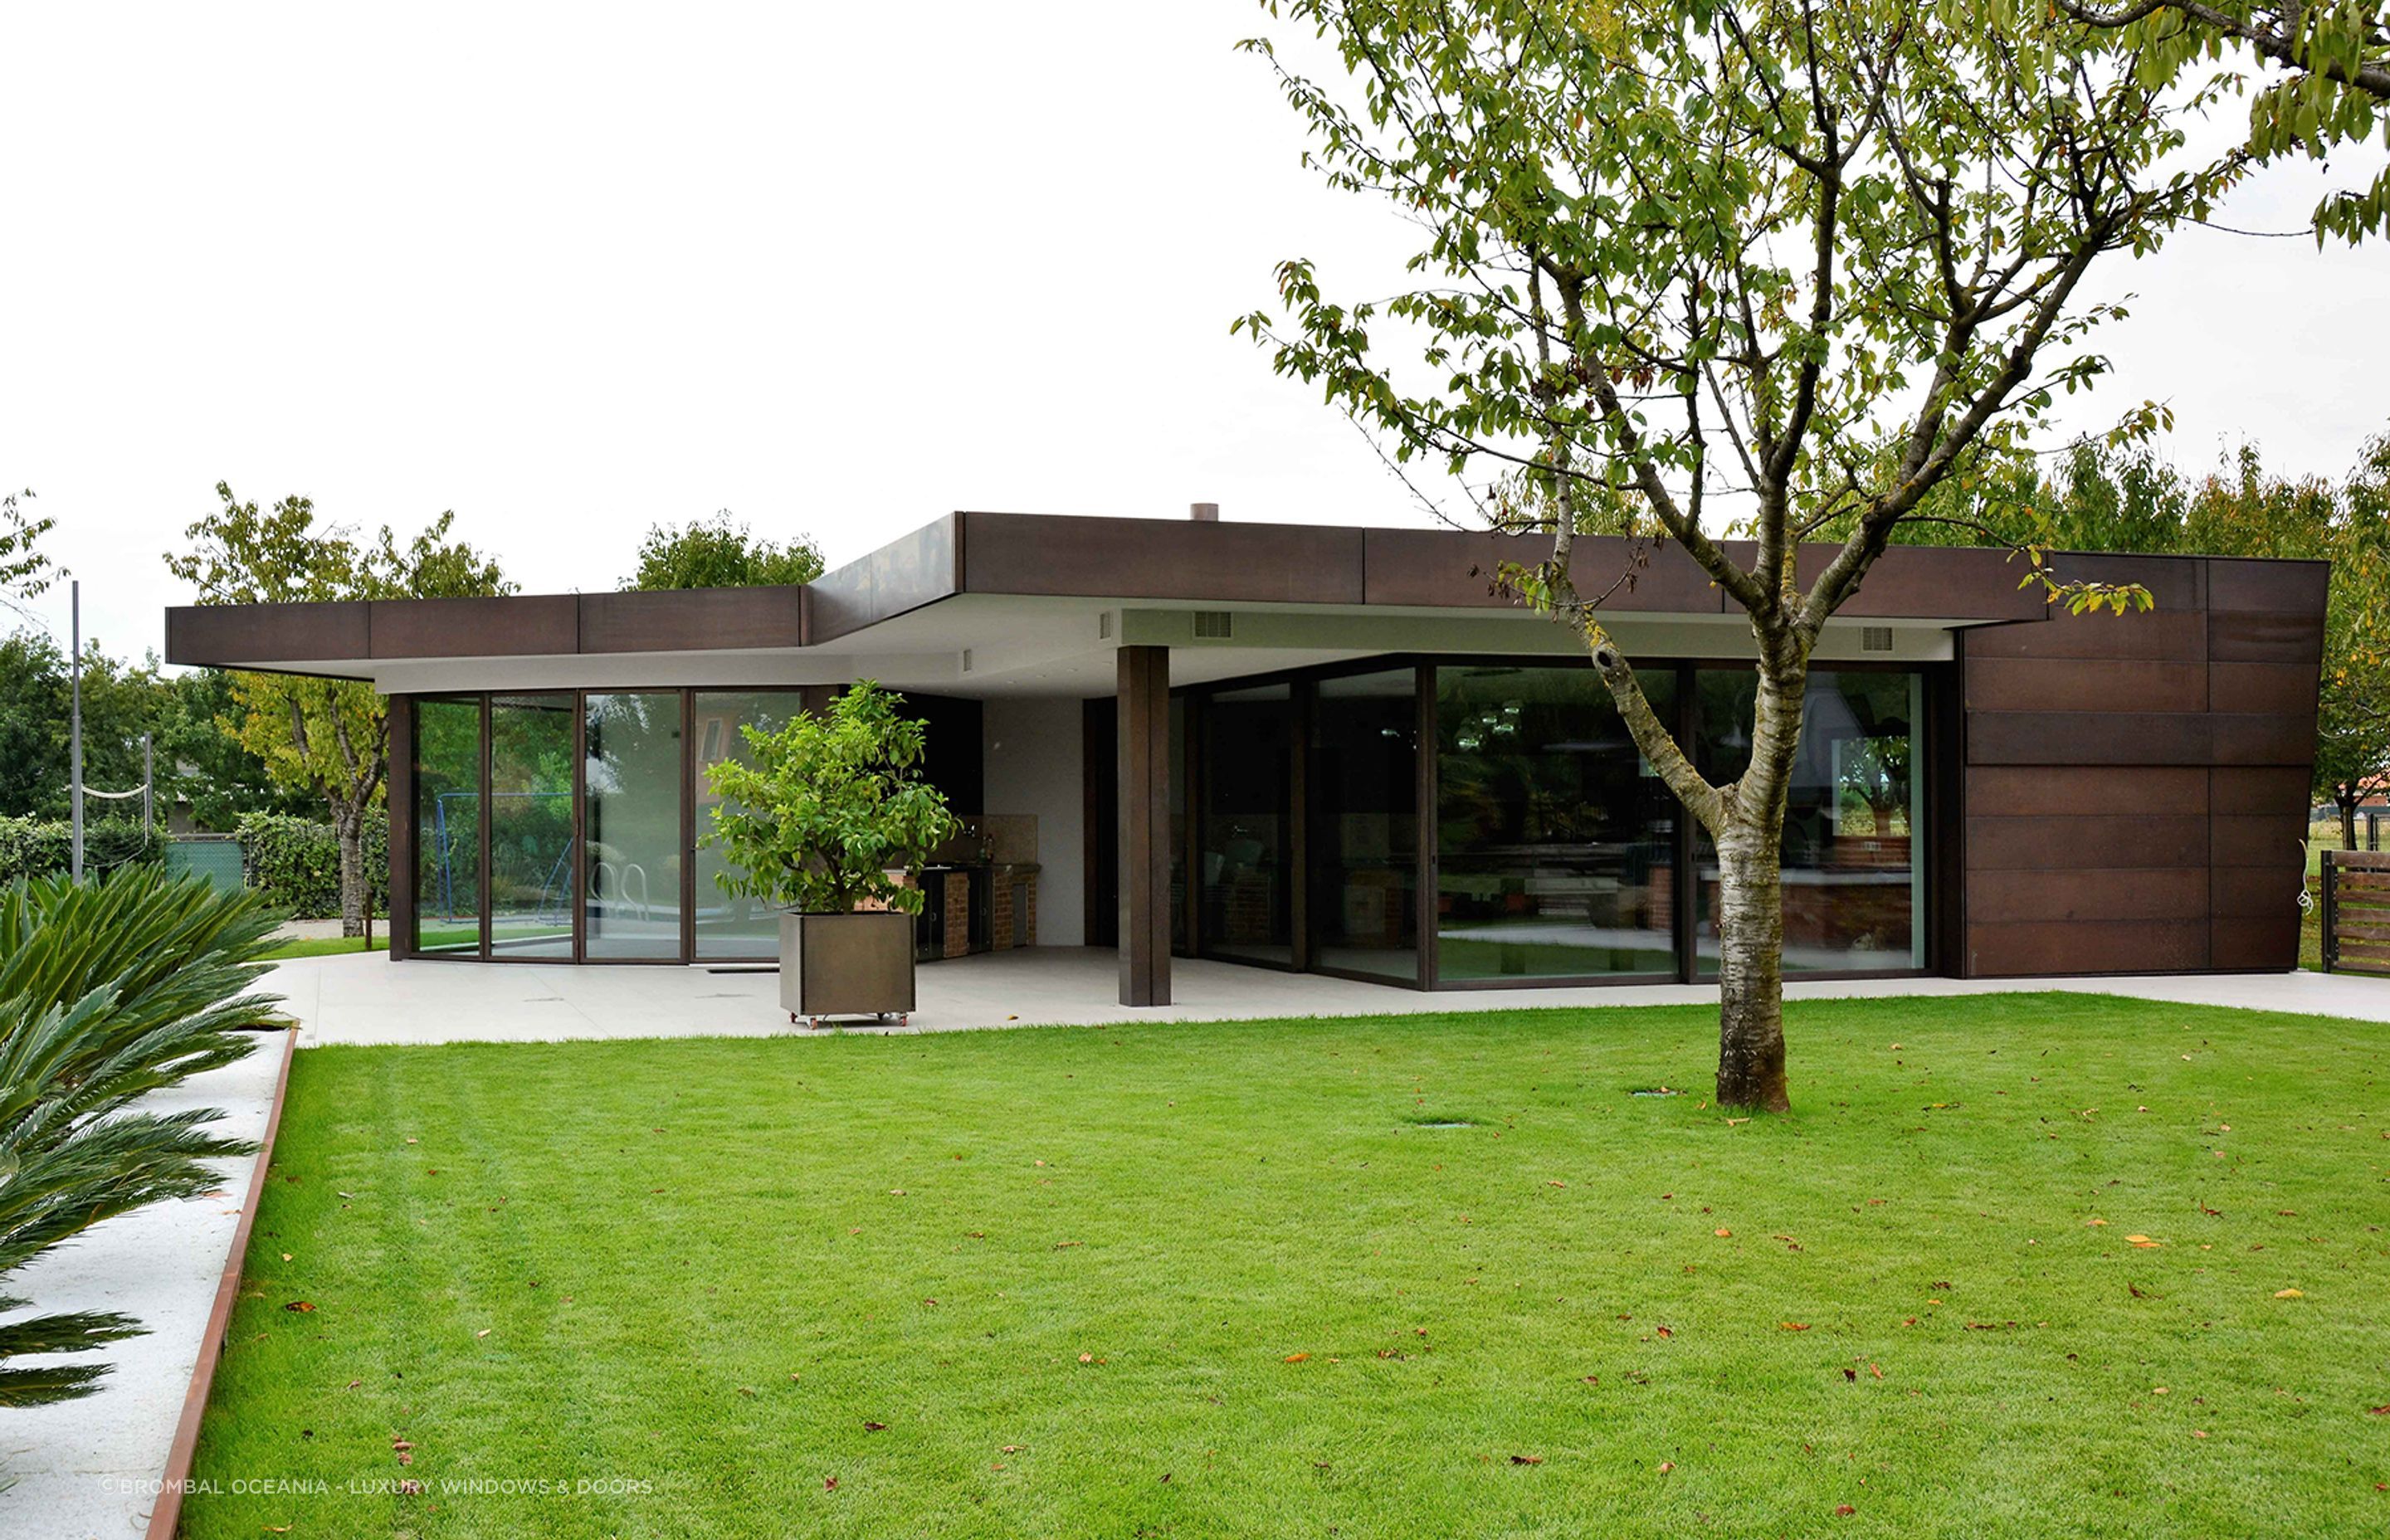 Bronze cladding can make a house look ultra-modern and sleek.